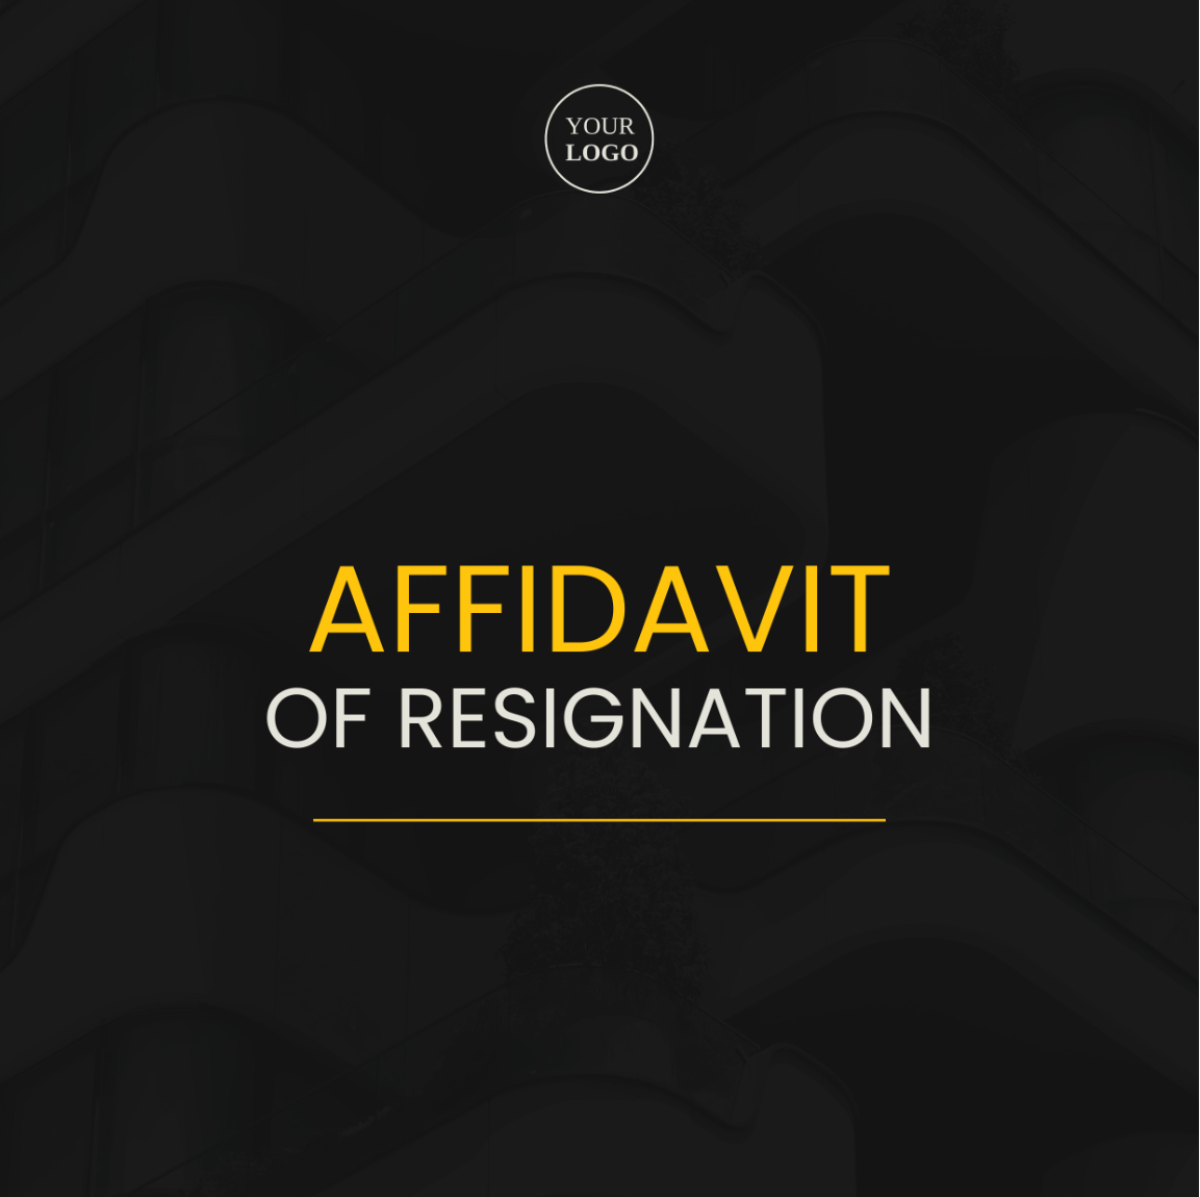 Affidavit of Resignation Template